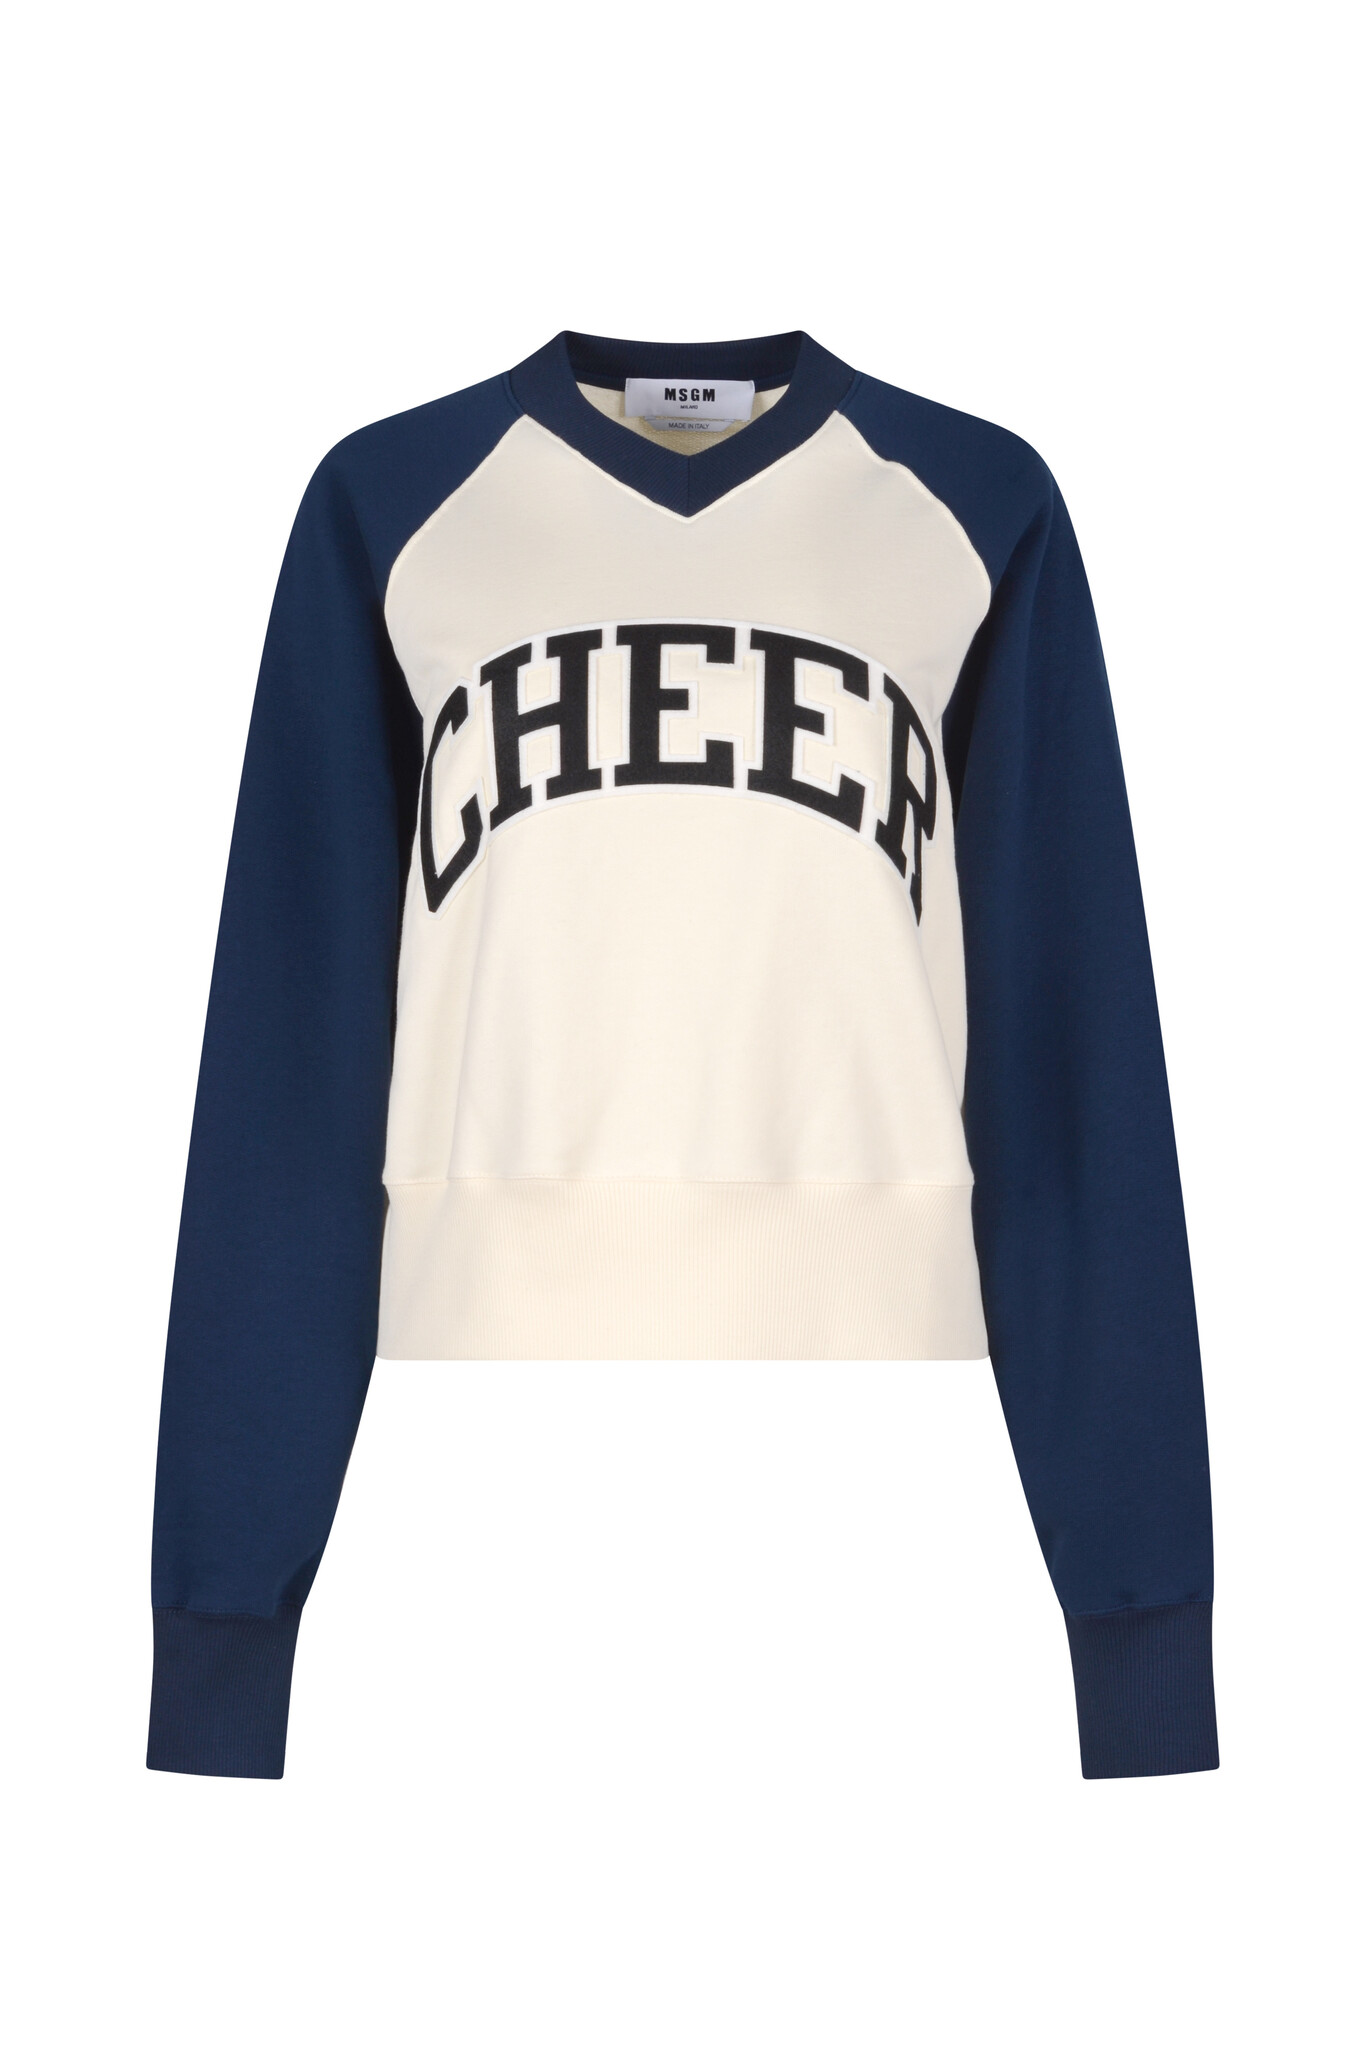 Cheer Sweatshirt-1